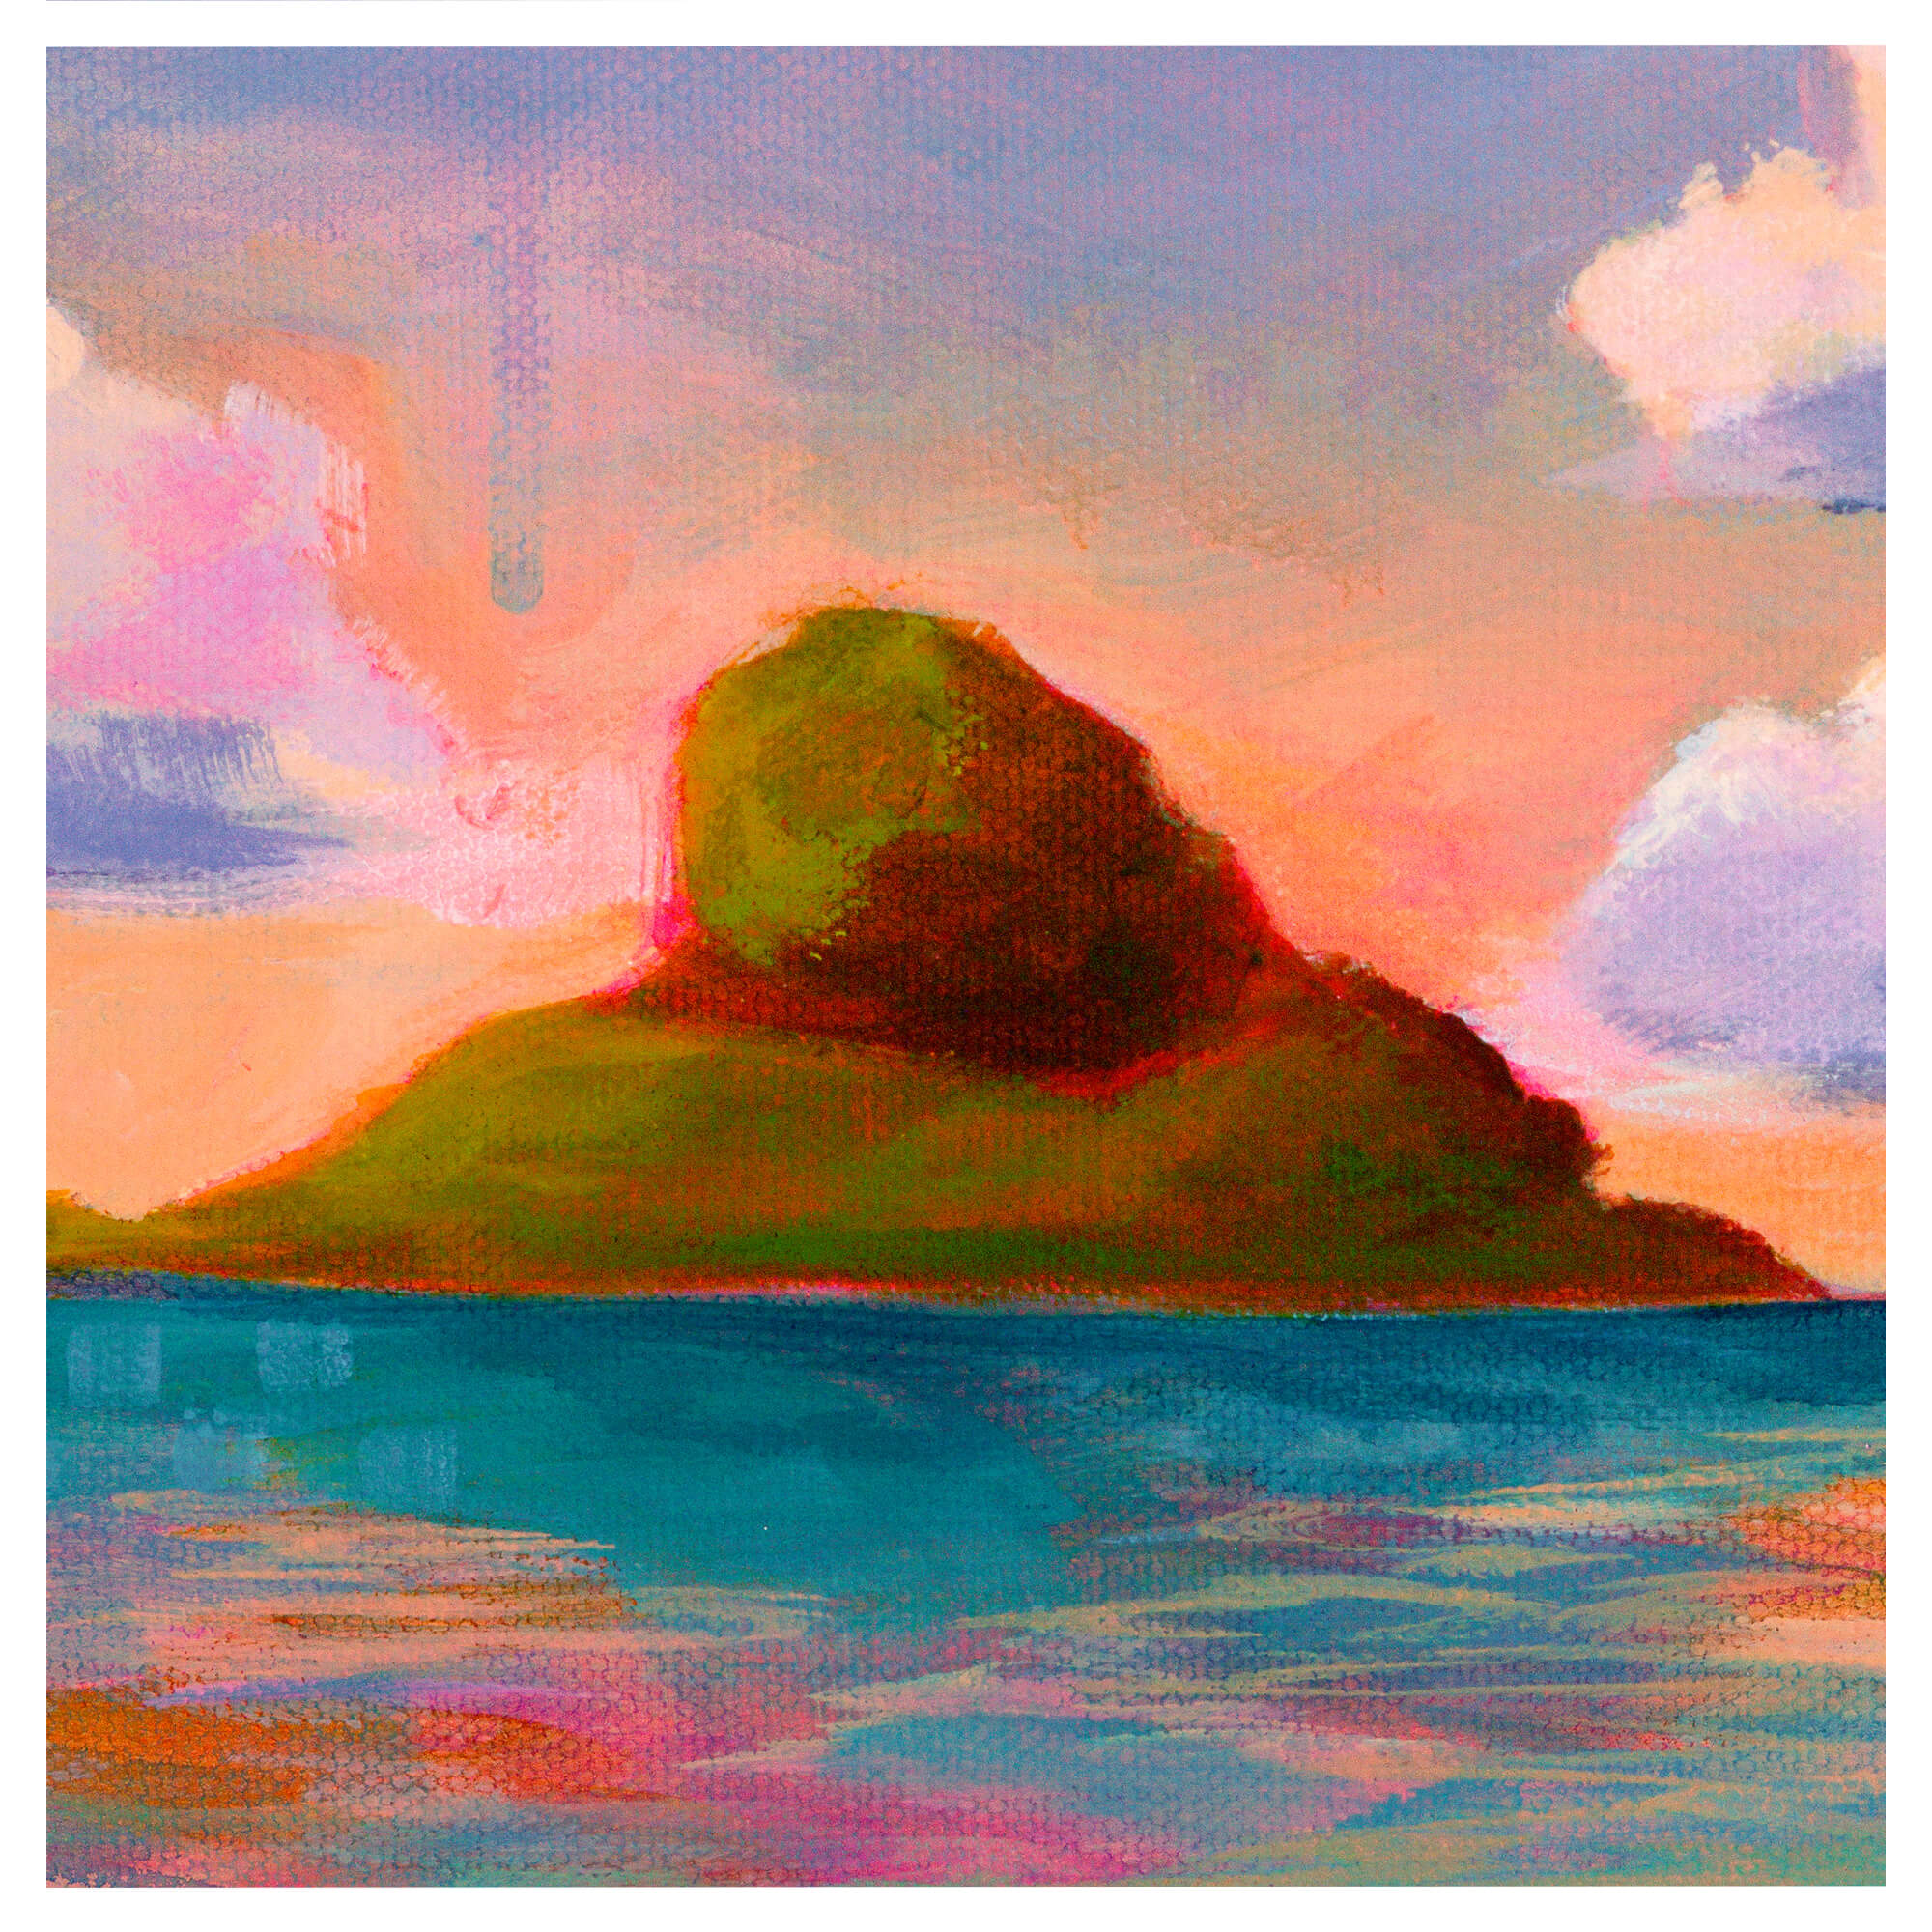 A distant island by Hawaii artist Lindsay Wilkins